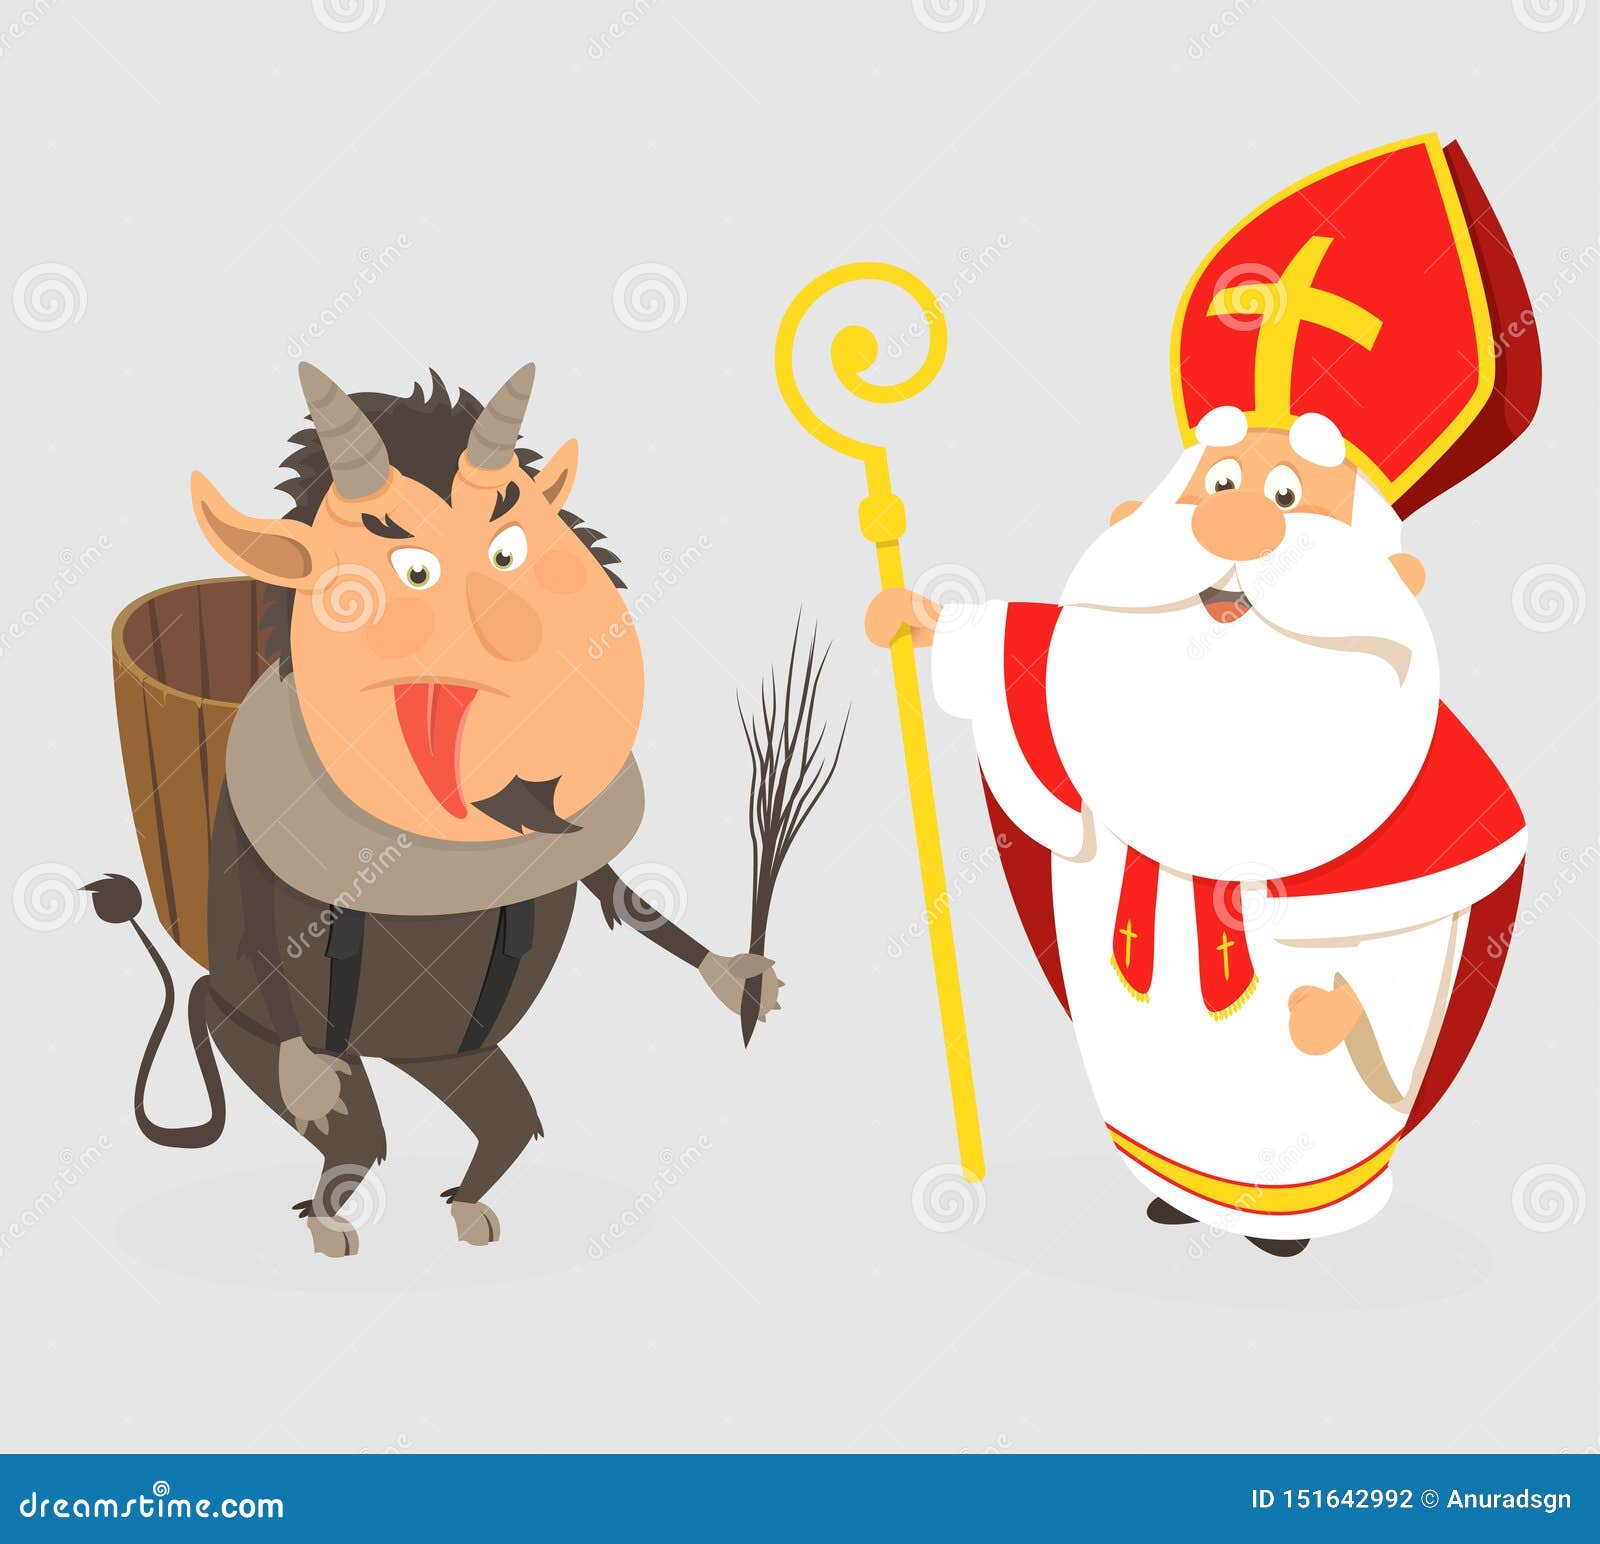 title: krampus and saint nicholas - cartoon style  -  